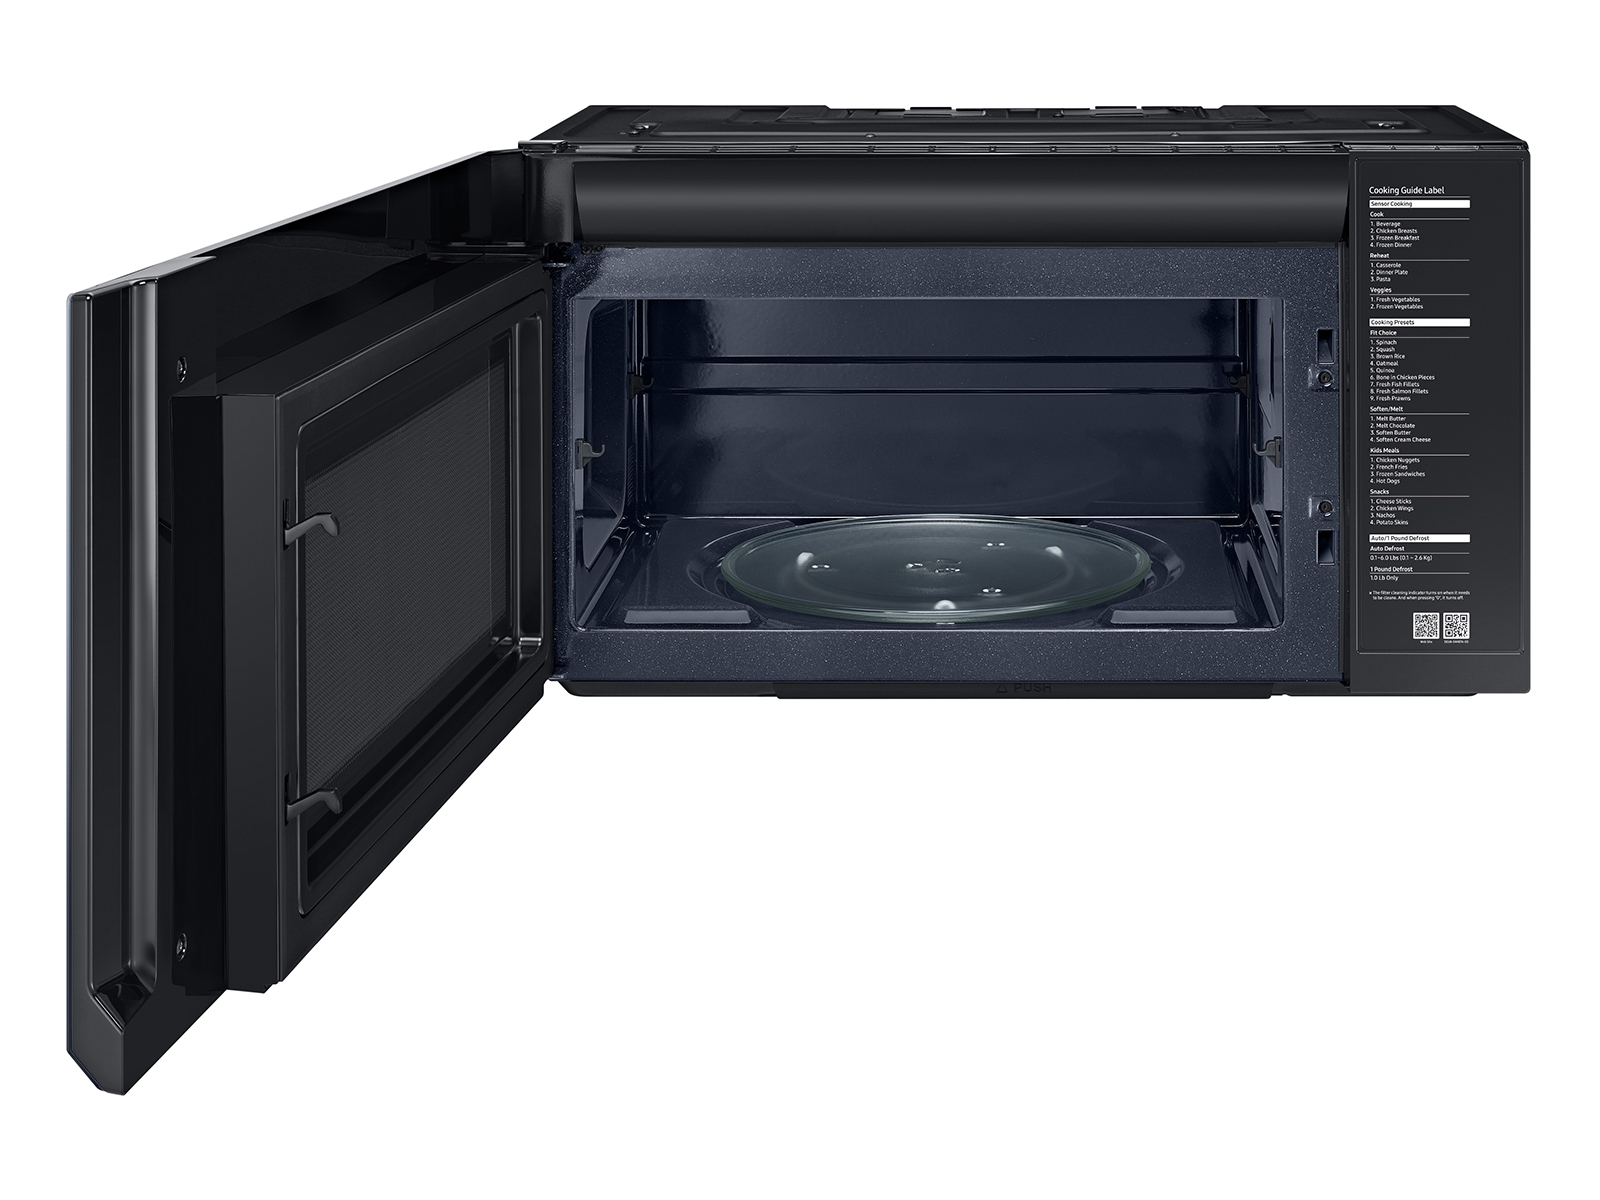 Samsung Microwave Oven 40J5133 (Grill) – Bin Bakar Electronics